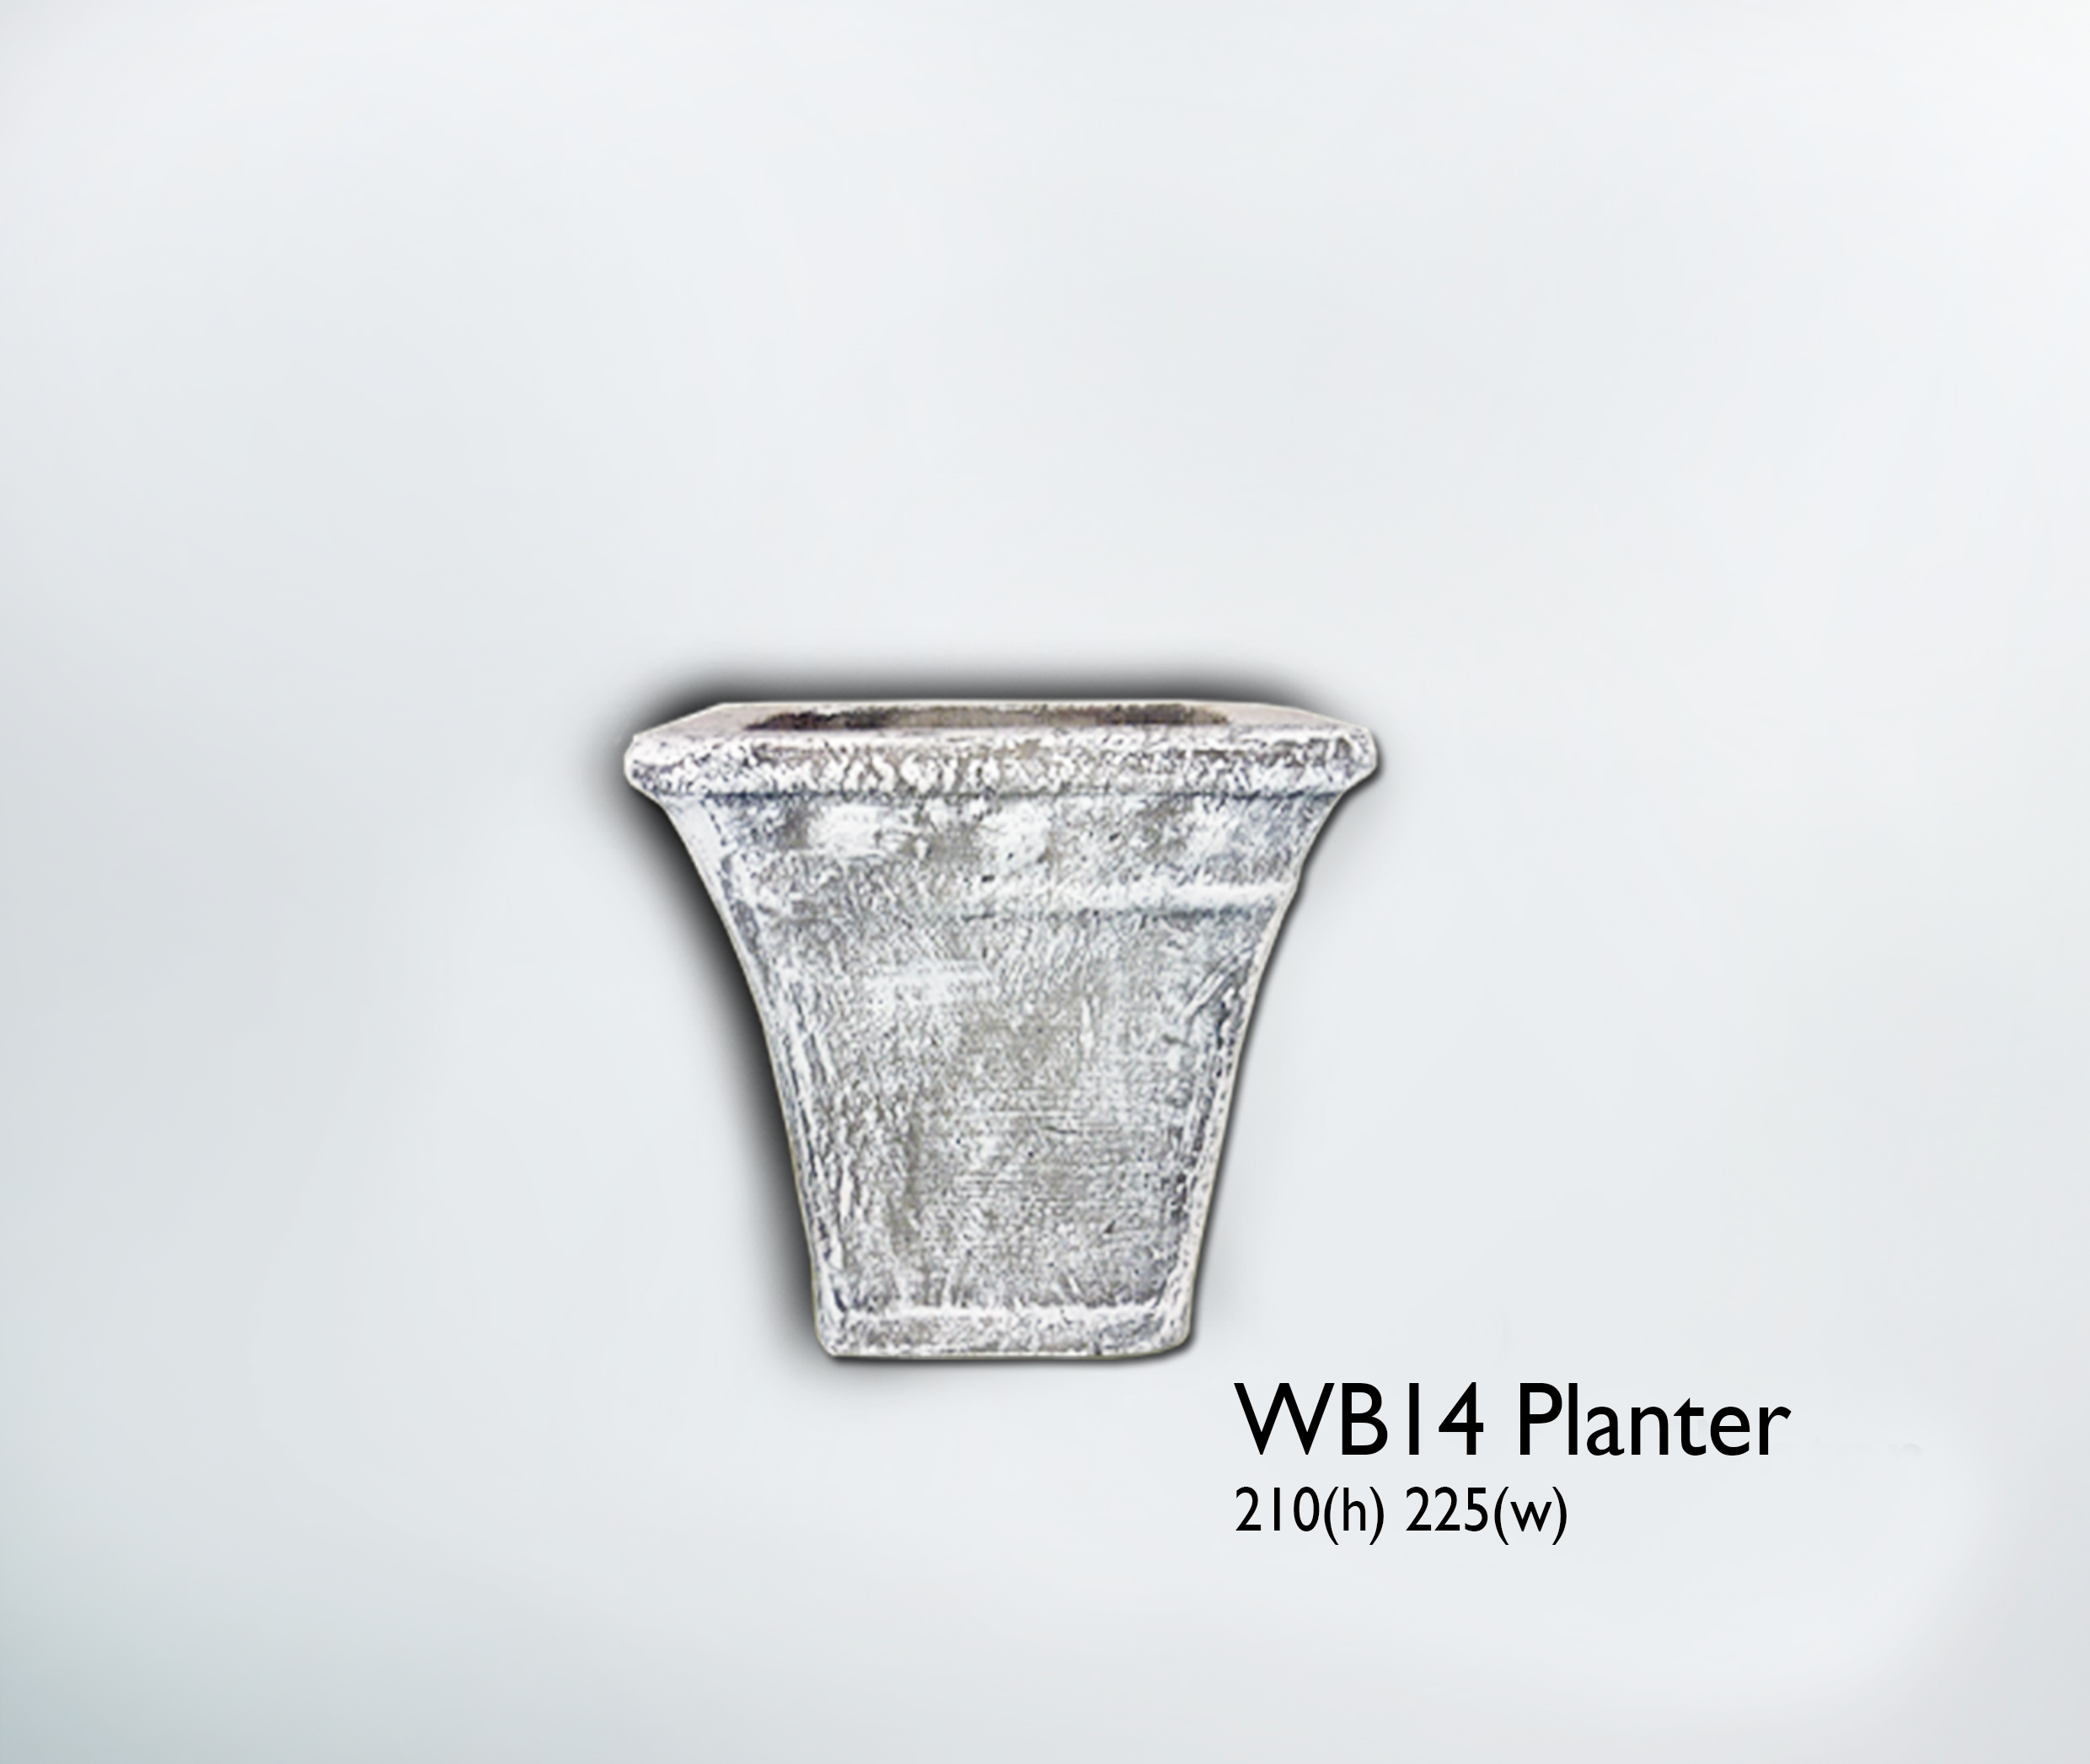 WB14 Planter